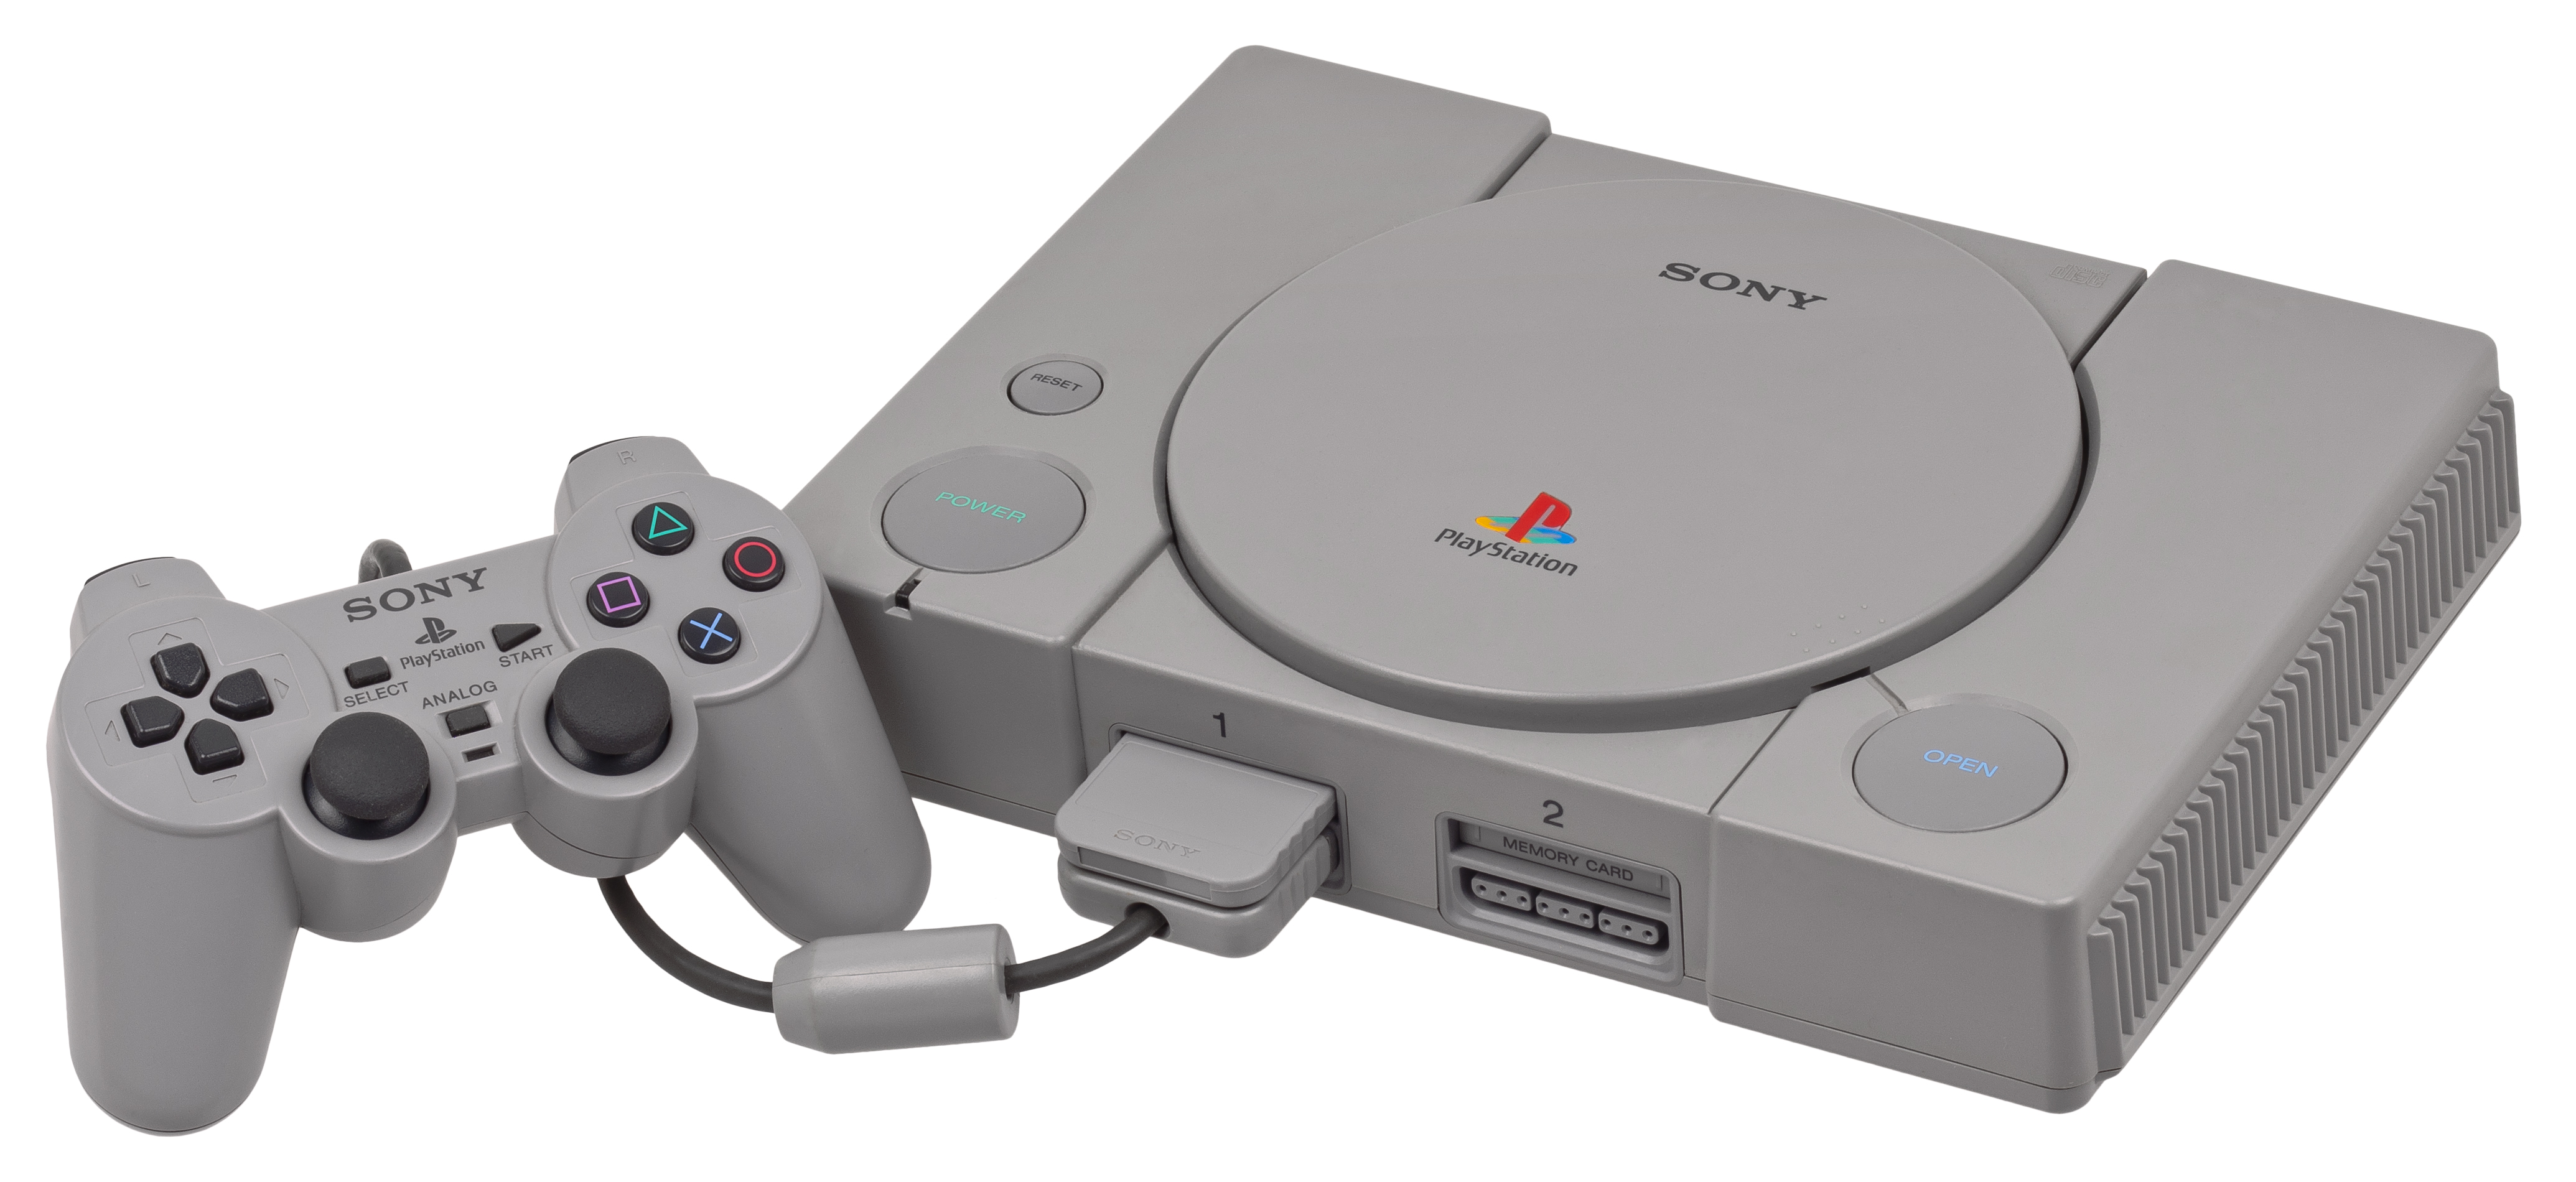 The original PlayStation.